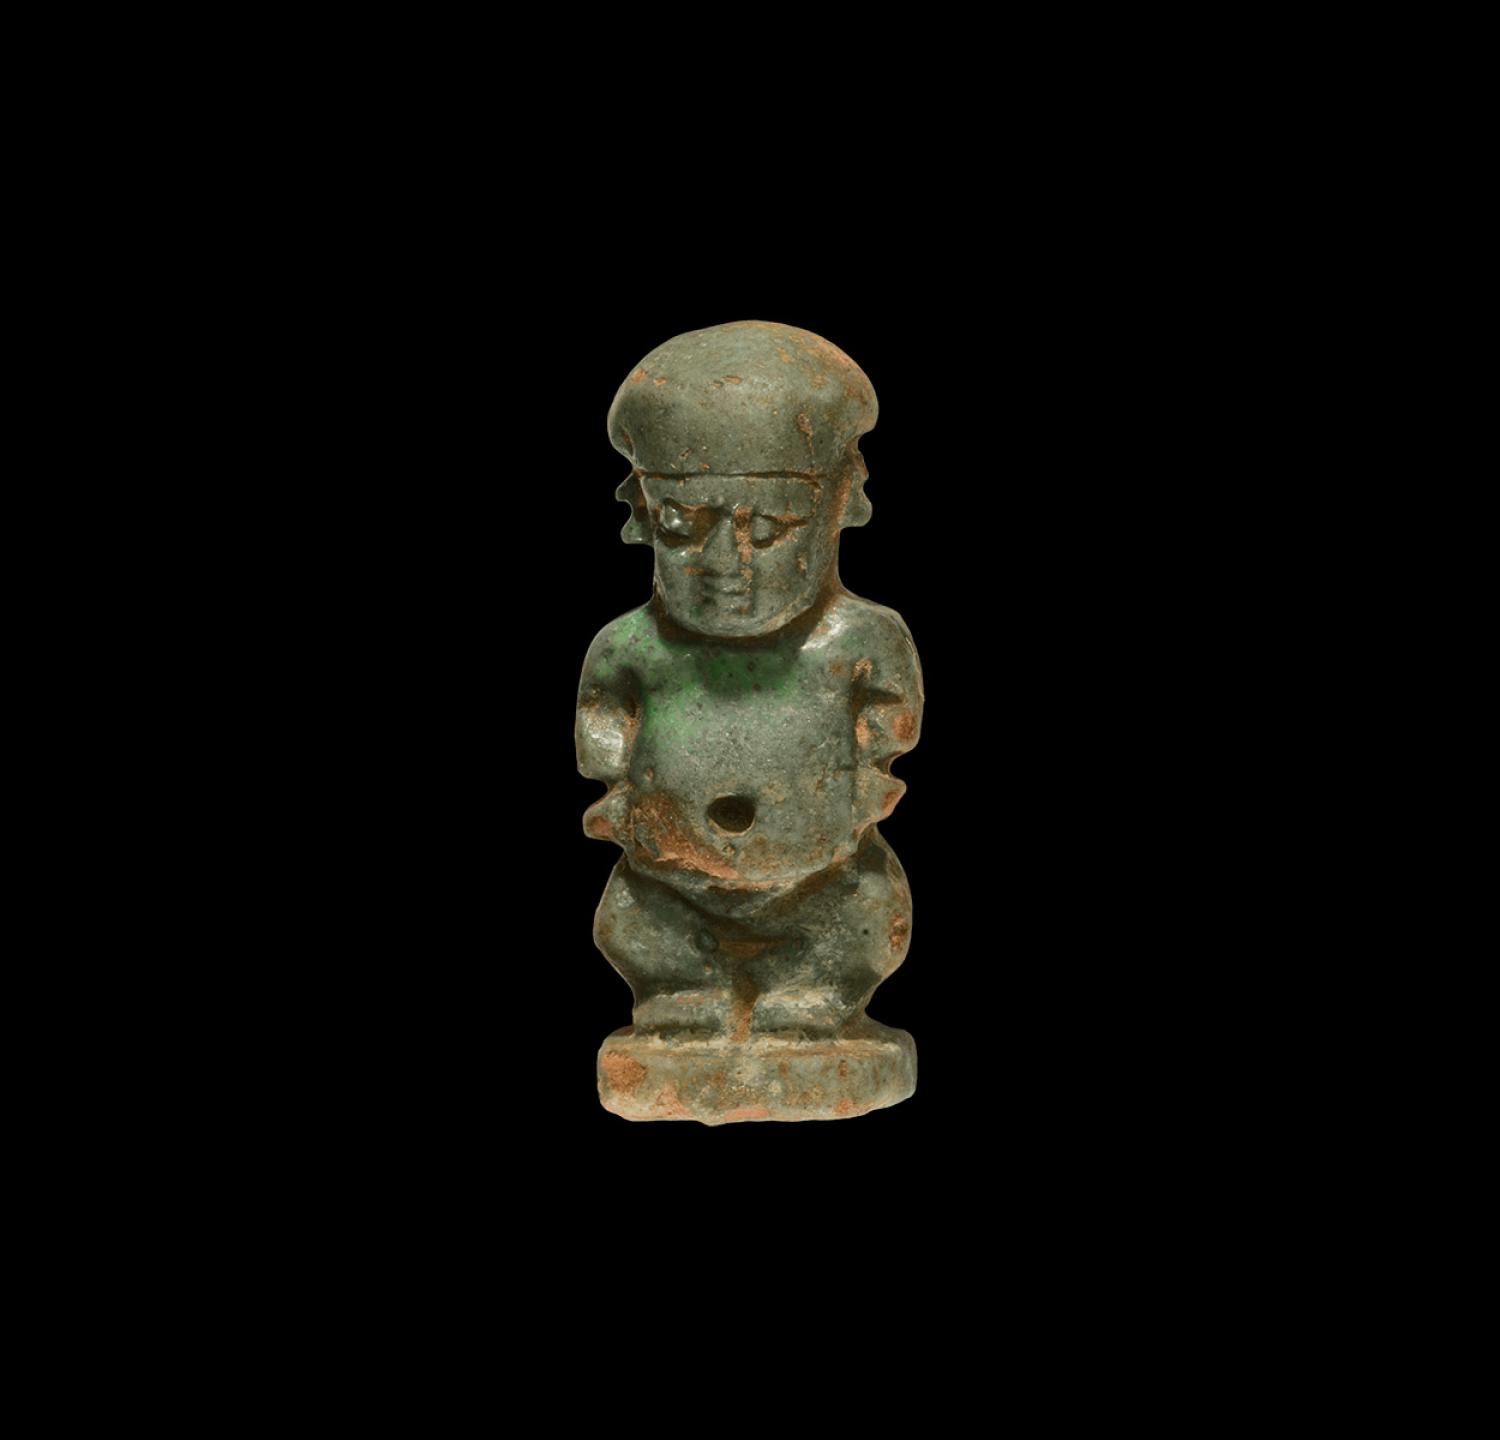 Rare Antique Glazed Faience Pendant Duck Amulet Figurine of Ancient Egyptian...LARGE